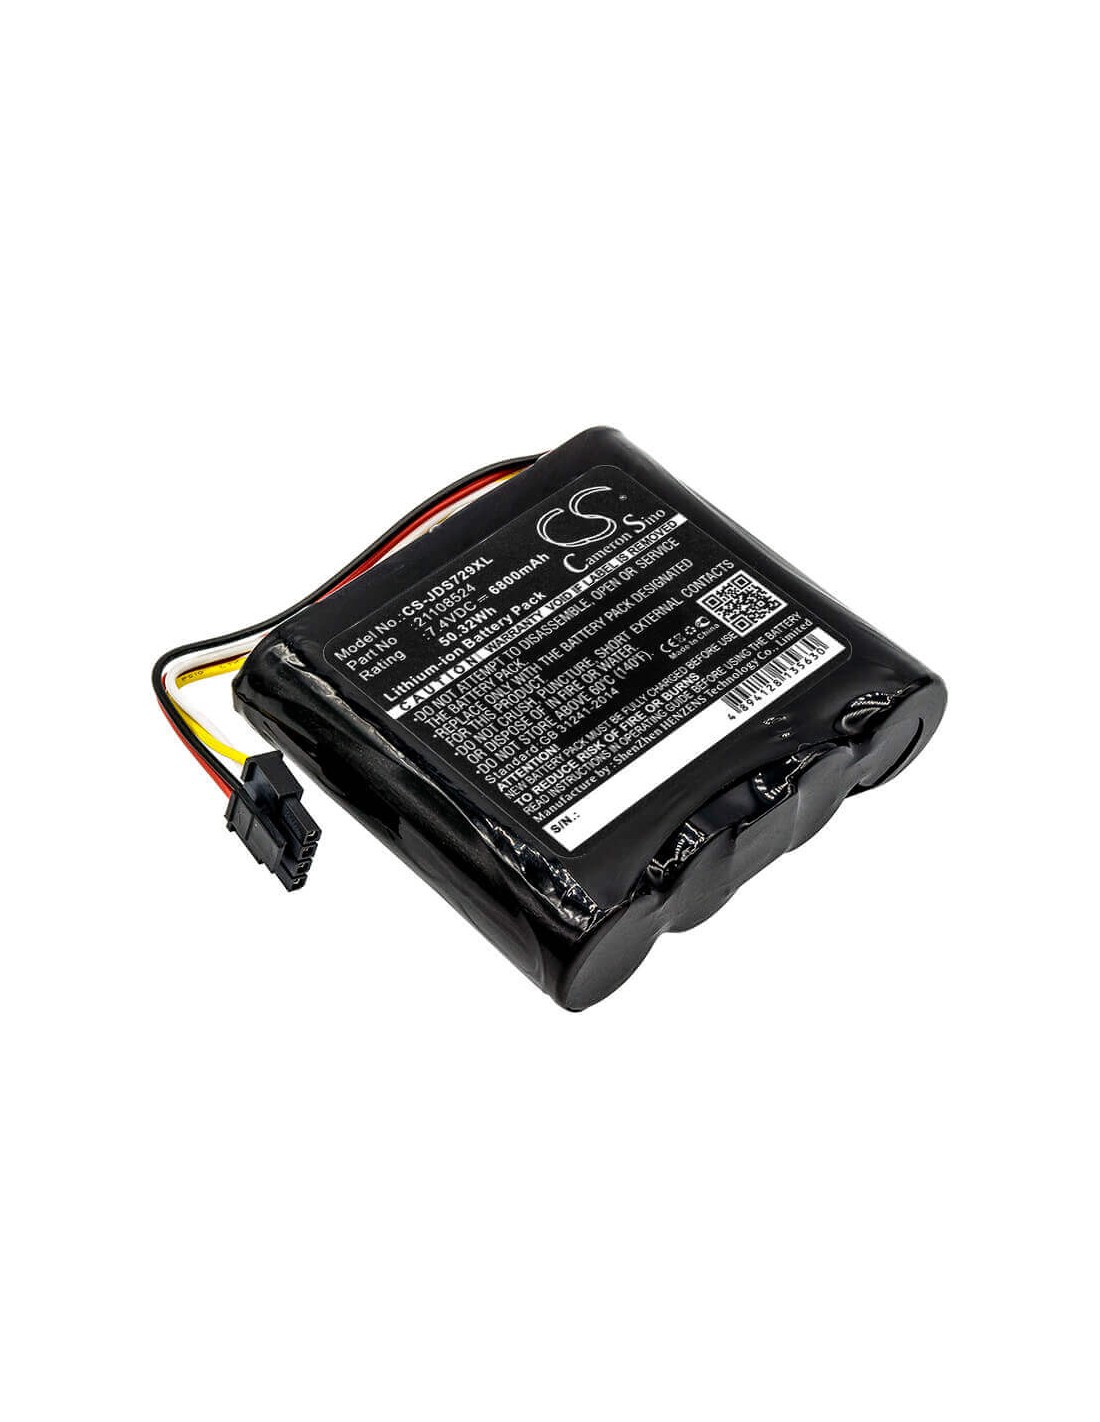 Battery for Jdsu 21129596 000, 21100729 000, Wifi Advisor Wireless Lan Analyzer 7.4V, 6800mAh - 50.32Wh